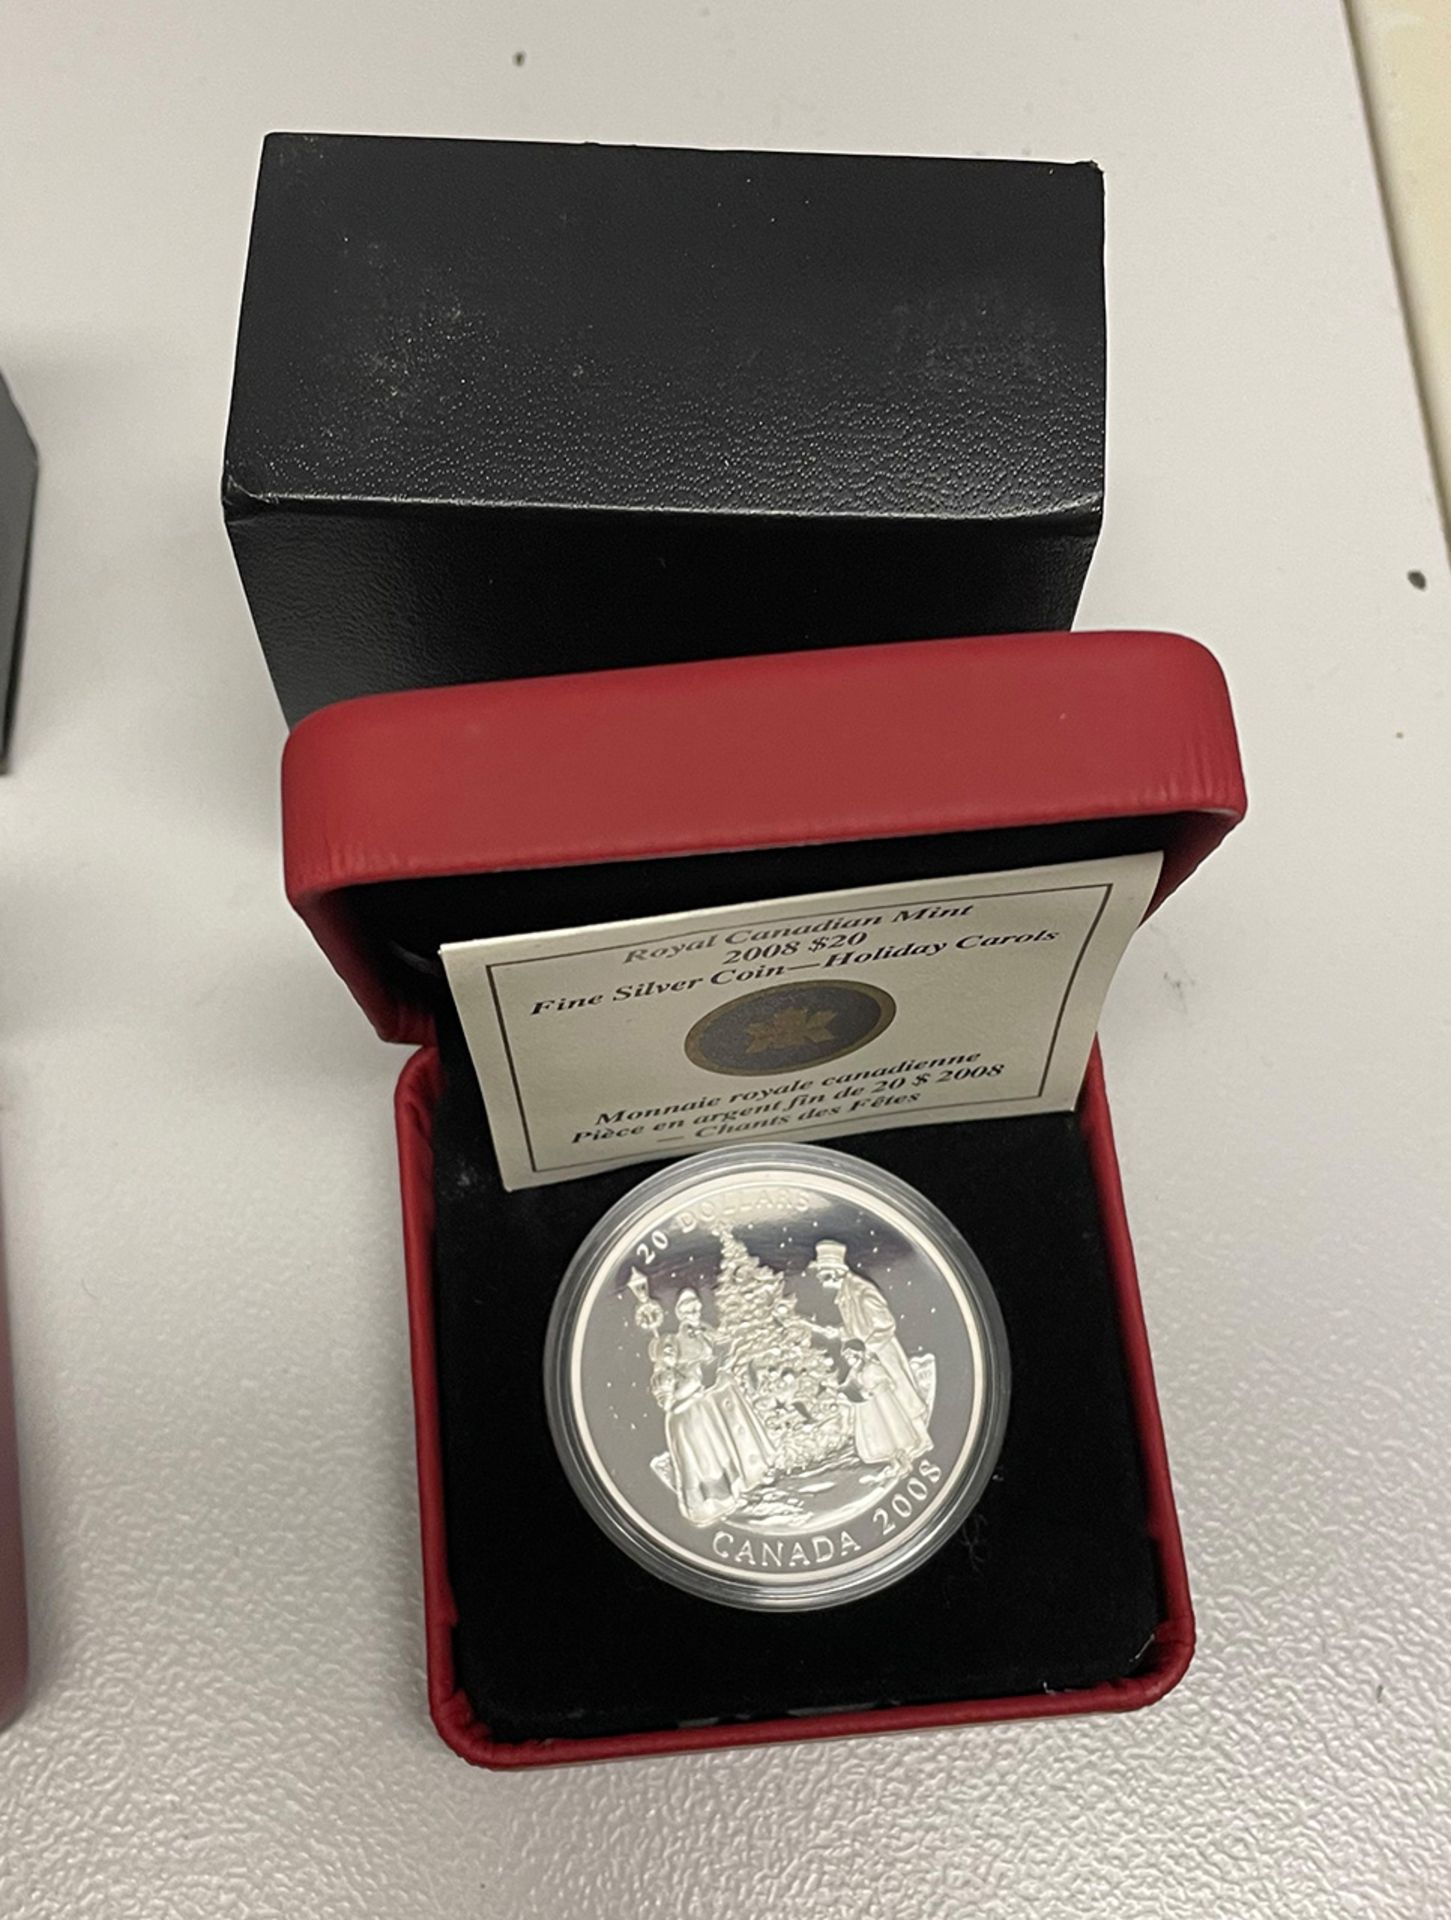 Silber Münzen Konvolut, Canada, Silber Dollars: 1 x 50 Dollar 2010 5-0unce Silver Coin, 99,99 % pure - Bild 5 aus 6